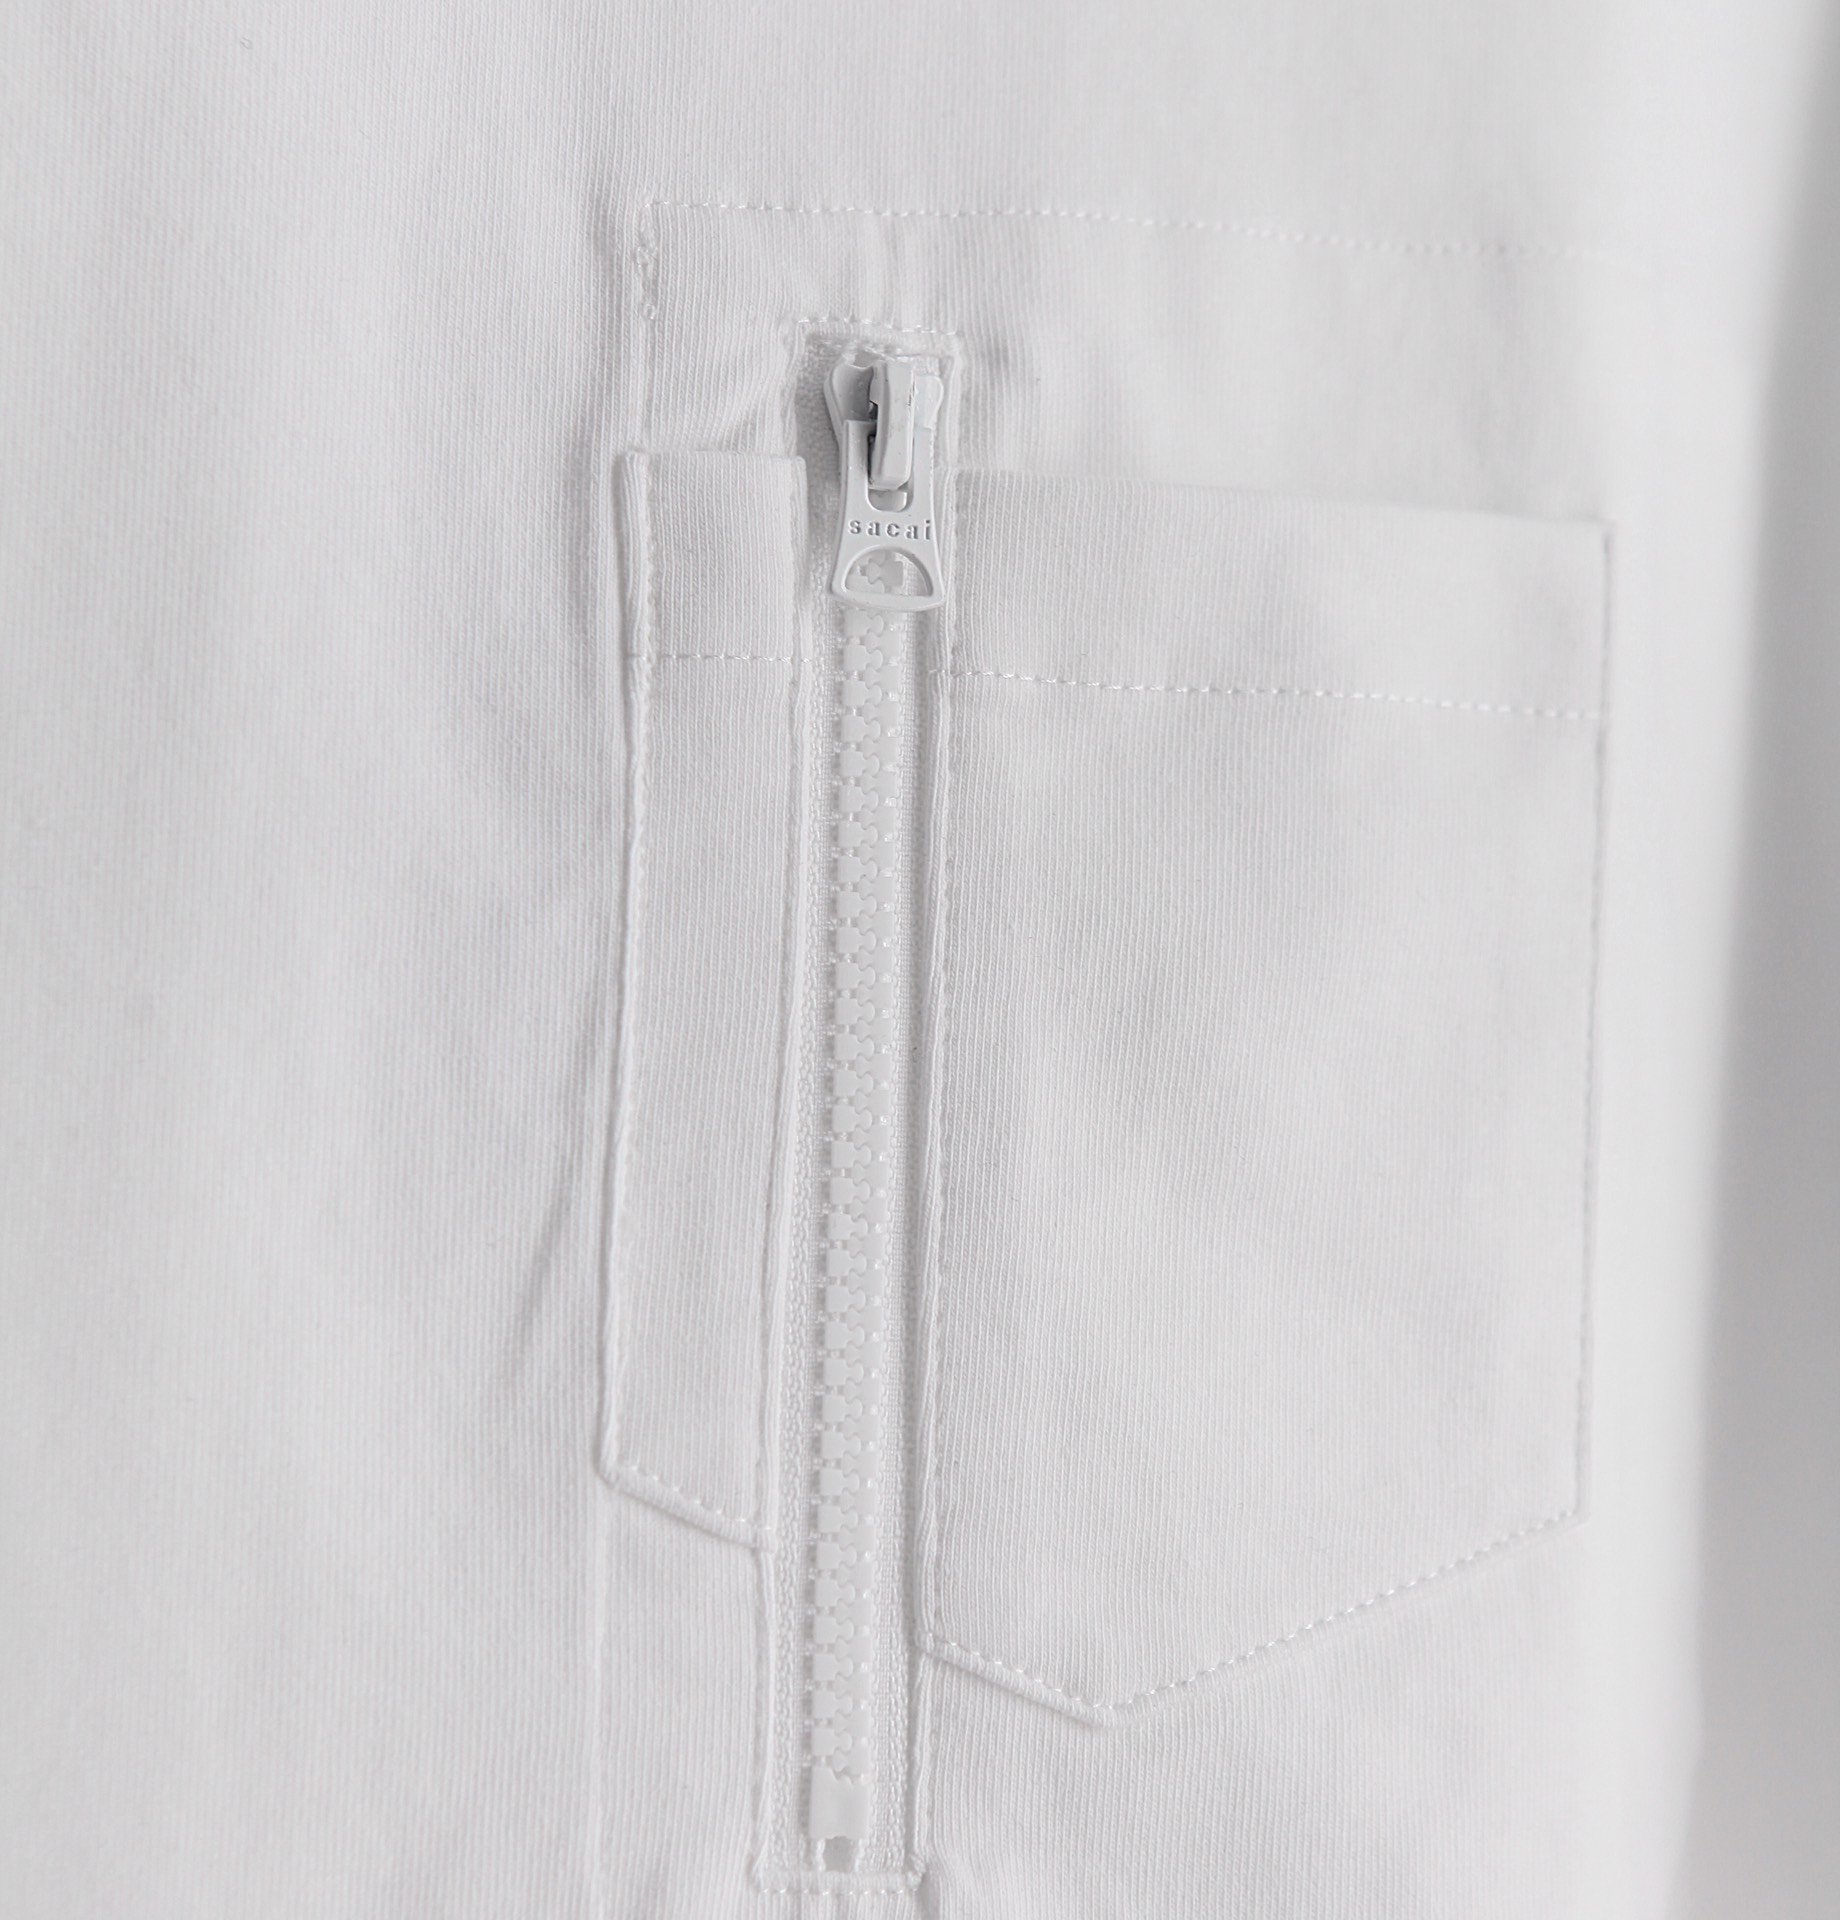 SACAI24春夏新品贴袋拉链设计圆领短袖T恤此款T恤领口加固双层螺纹设计拼接的很有巧思富有小心机拉链口